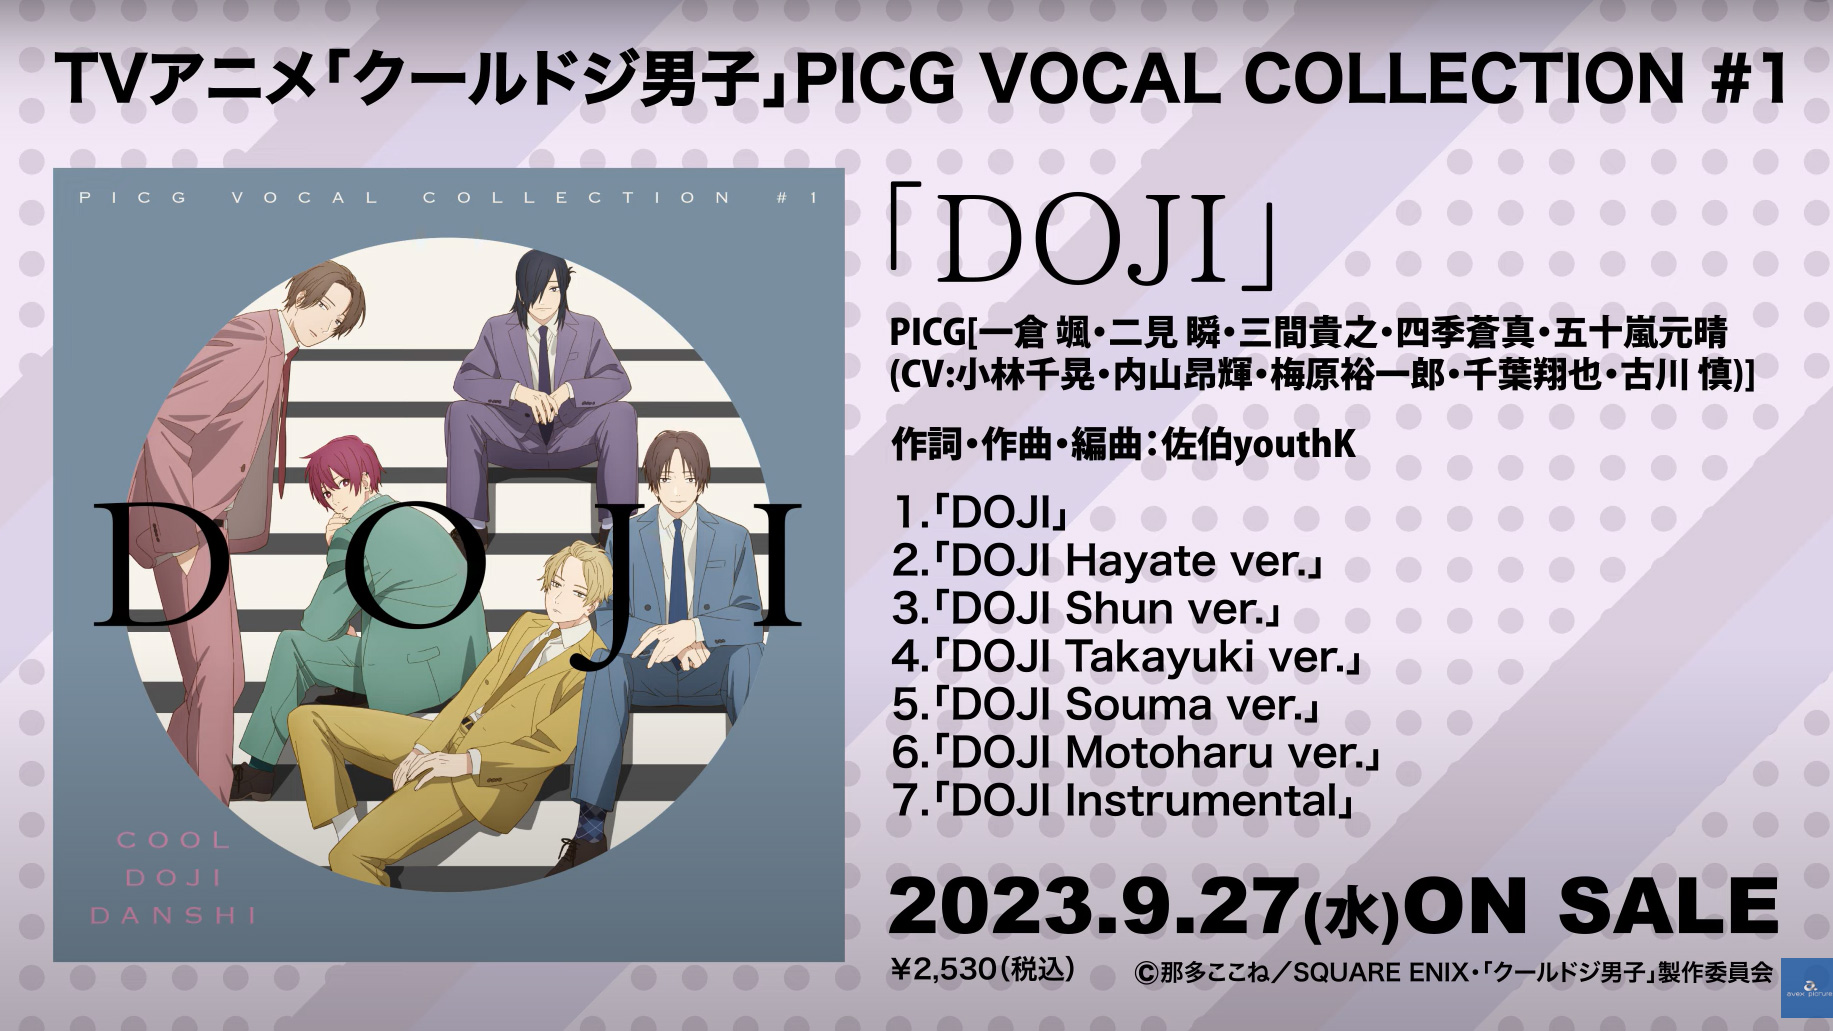 「PICG VOCAL COLLECTION #1「DOJI」PV